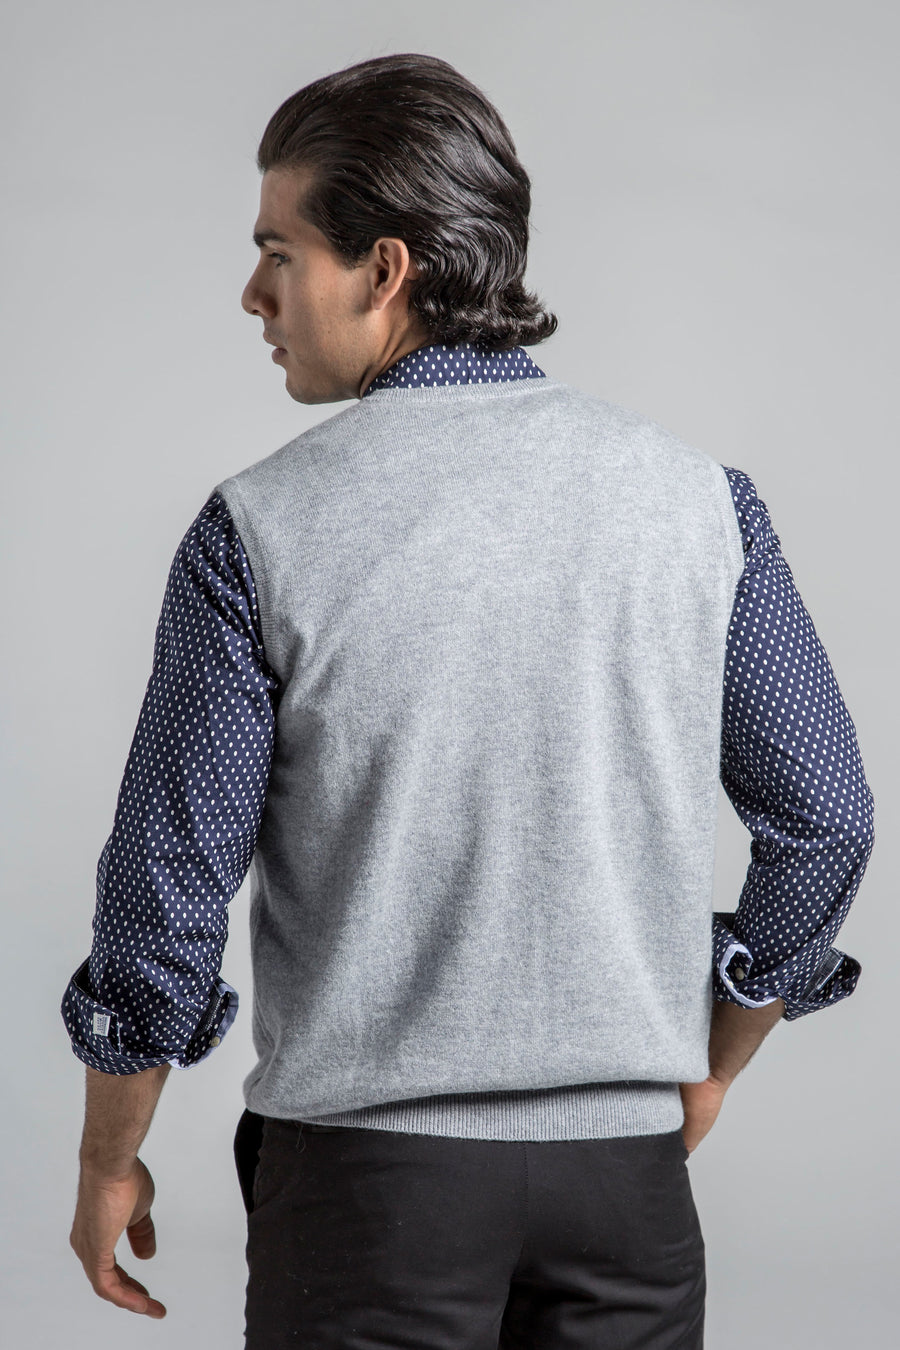 pine cashmere mens classic 100% pure cashmere v-neck sweater vest in grey